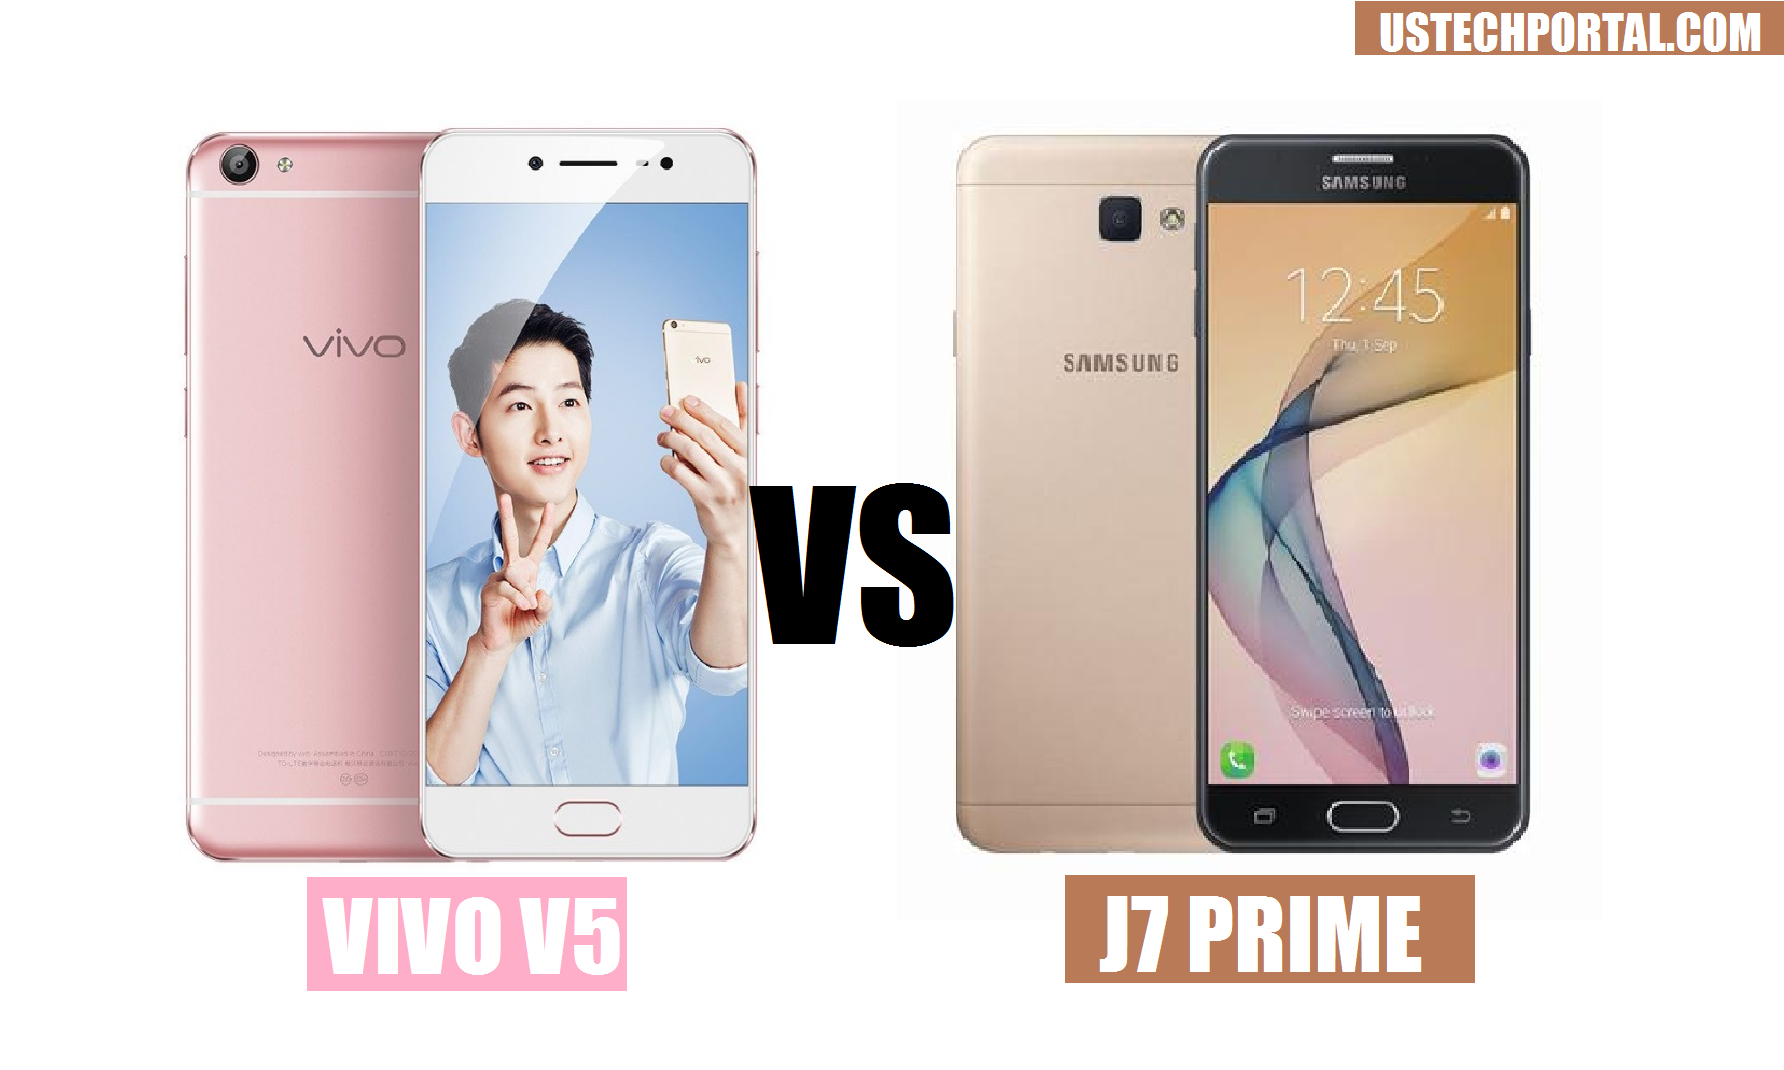 Vivo V5 VS Samsung Galaxy J7 Prime : Full Specs Comparision